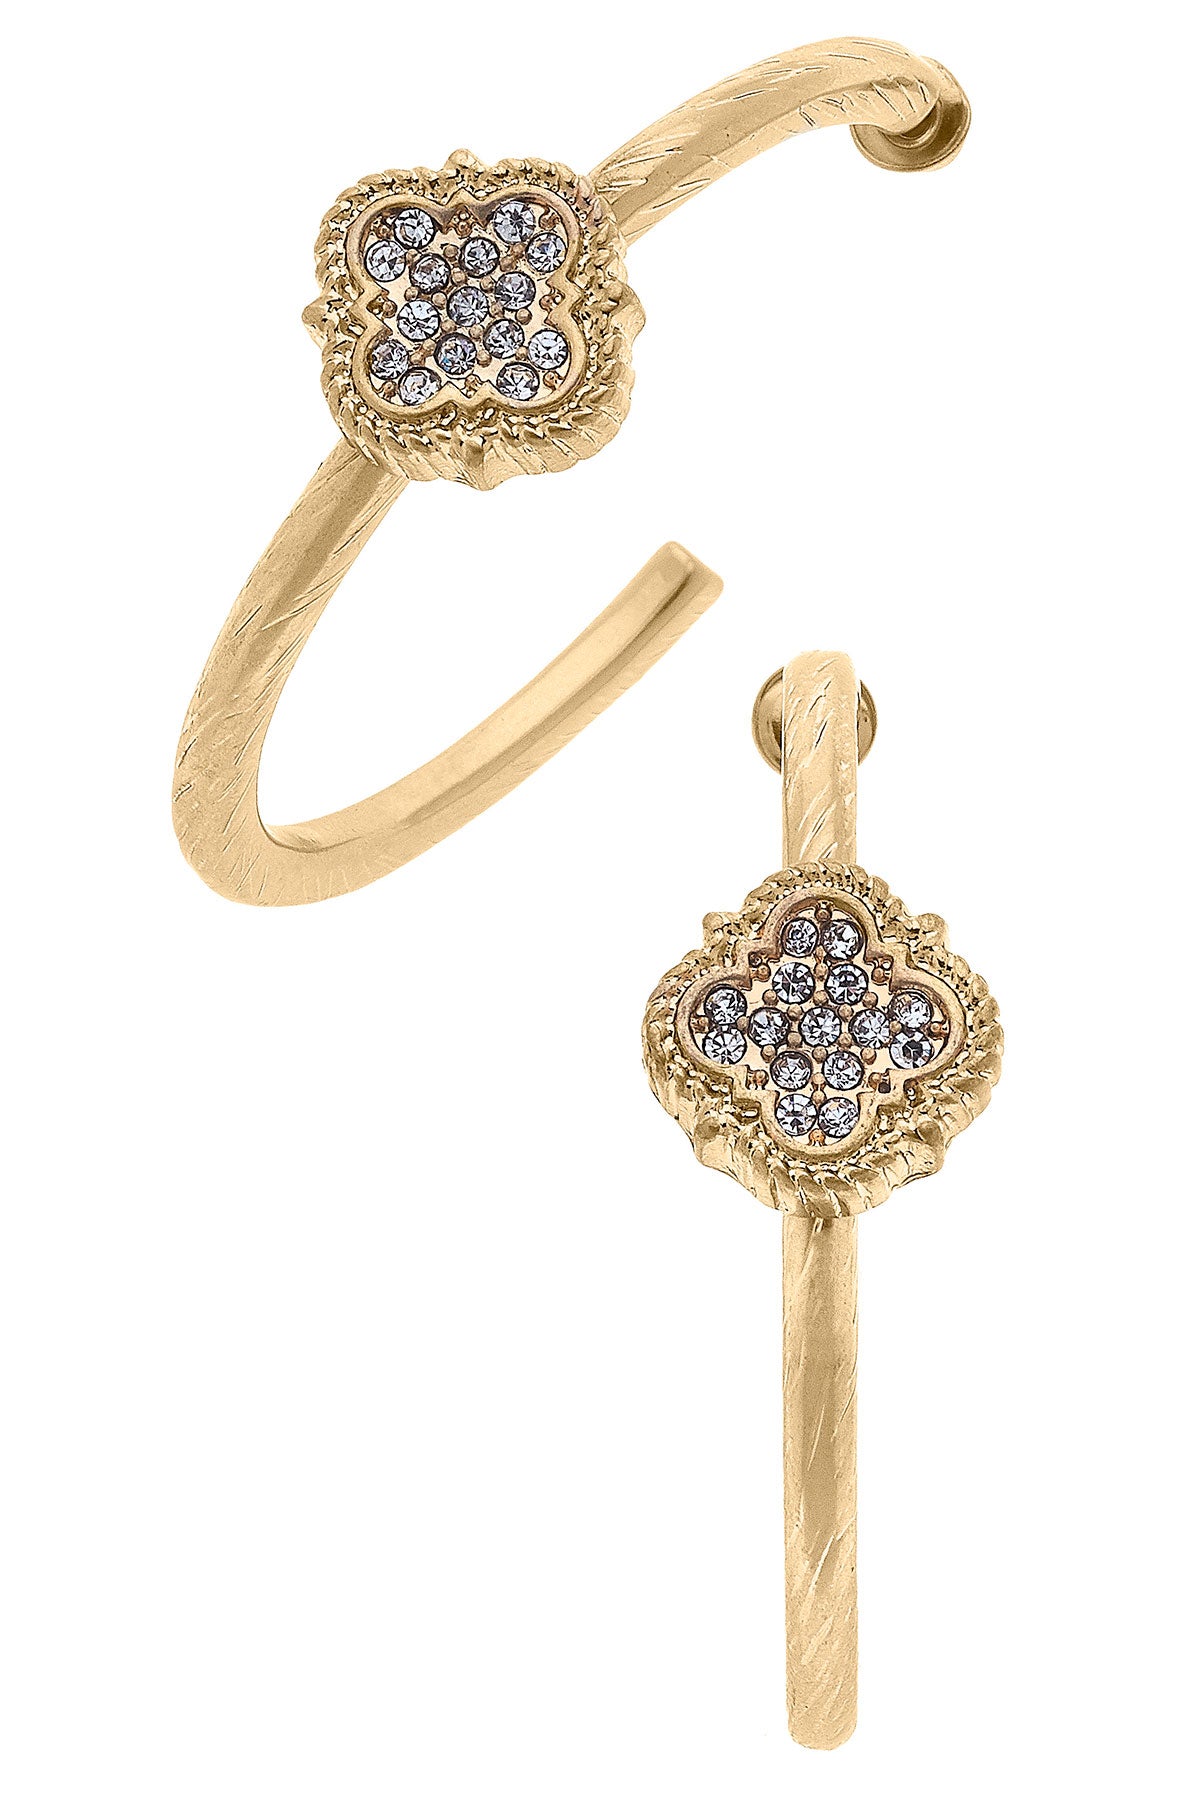 Gold Corrine Pave Clover Hoop Earrings - McClard's Gifts